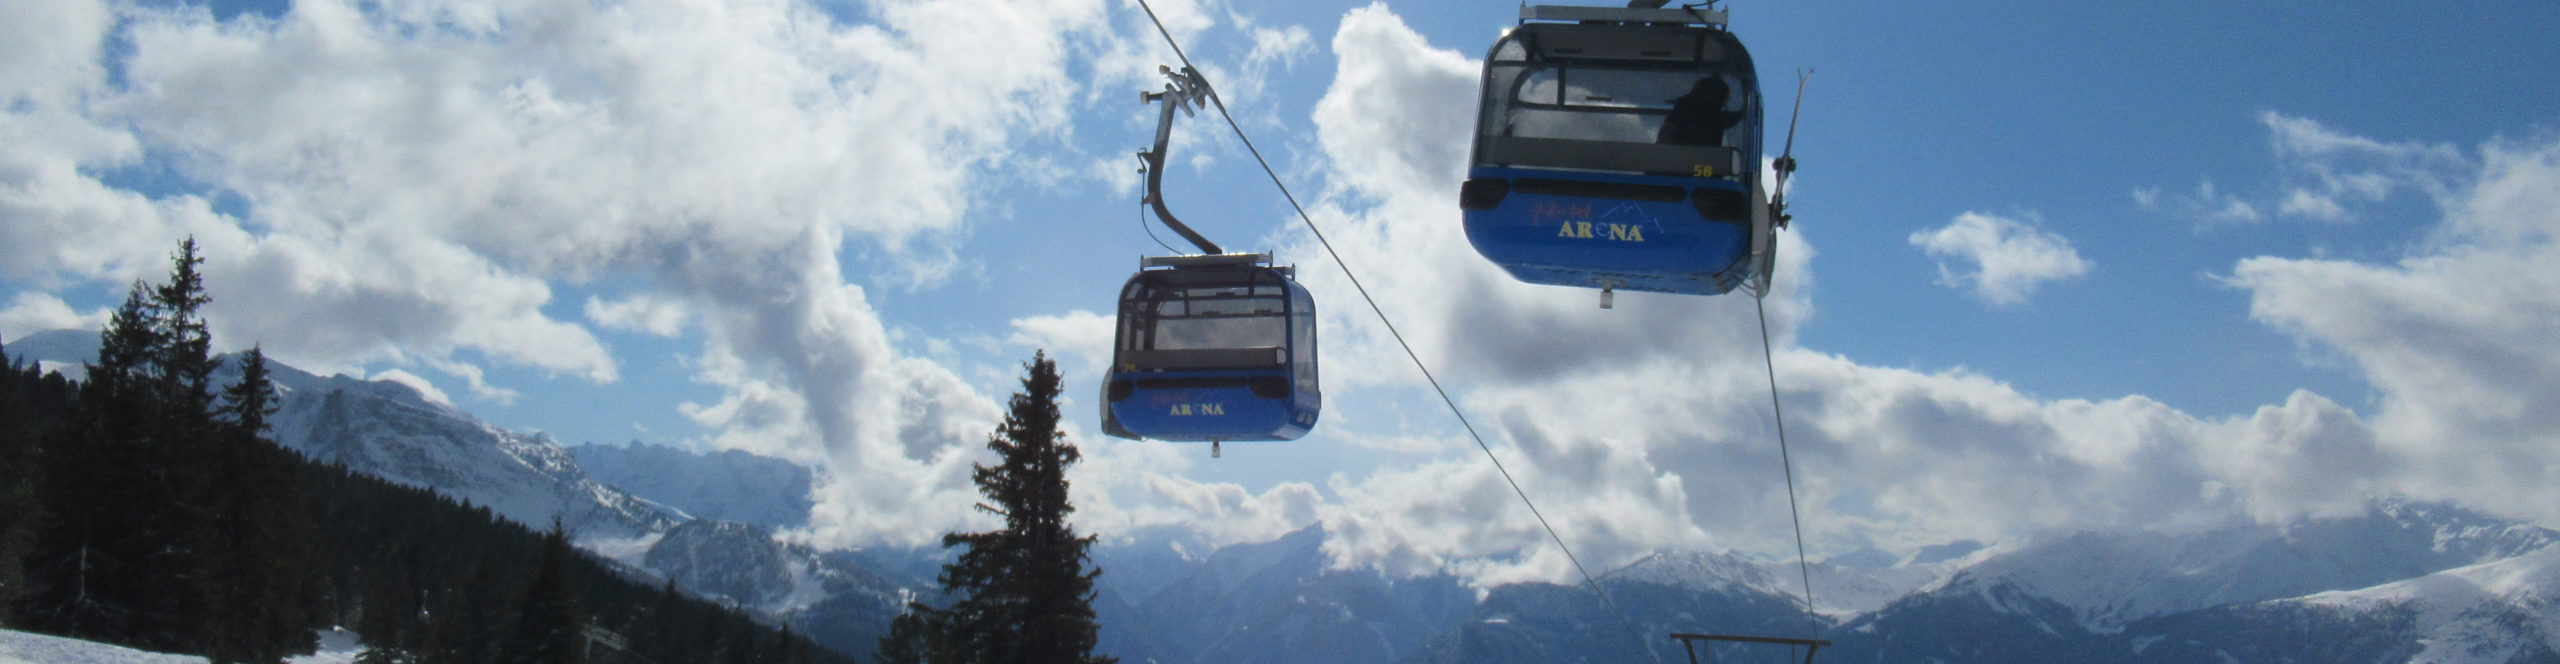 ZILLERTAL – Skiwochenende ab Freitag Nachmittag 